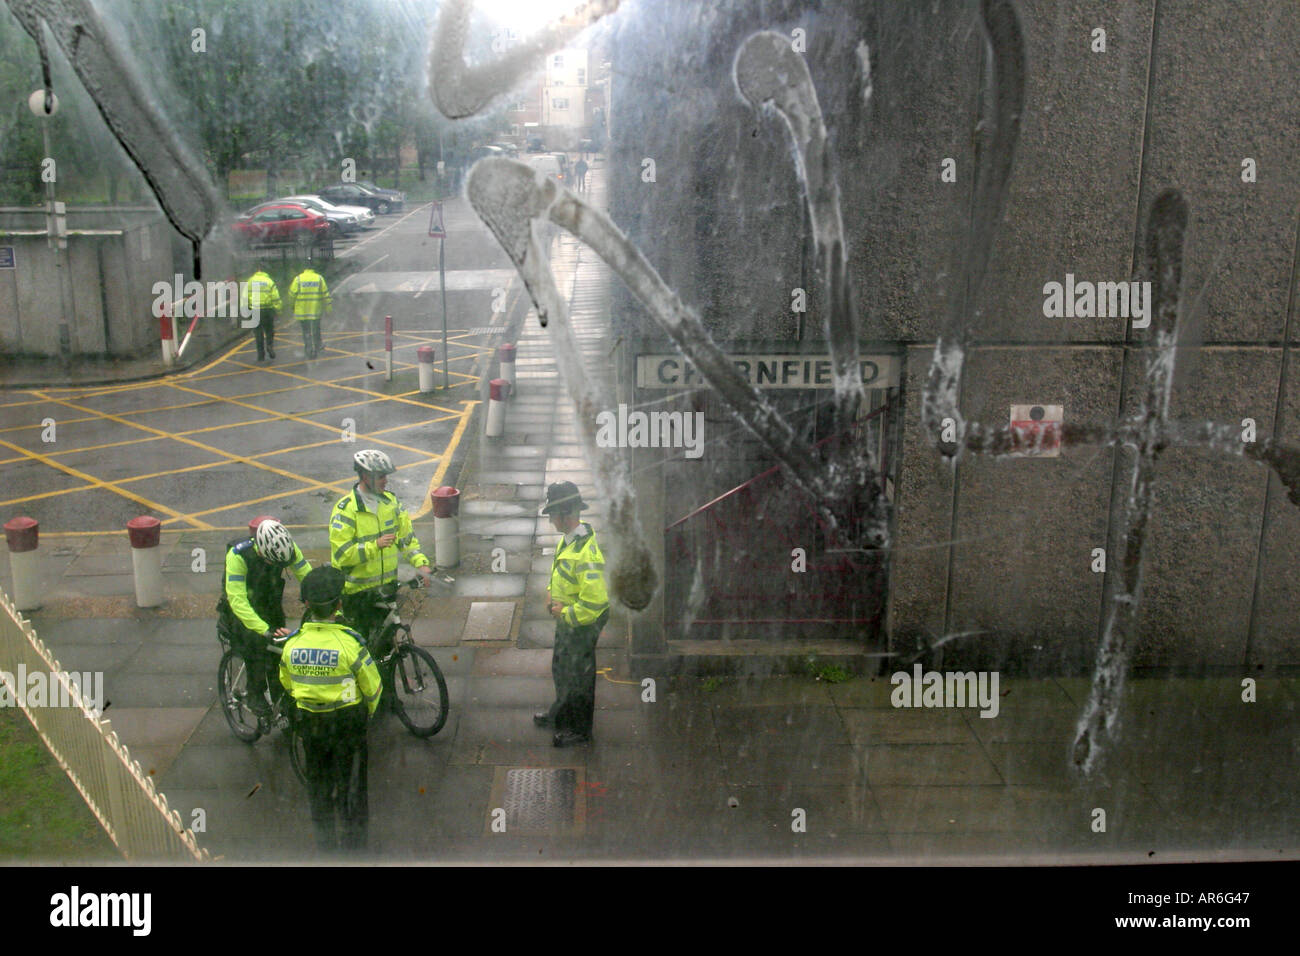 Police meet to patrol an anti-social behaviour exclusion zone on a housing estate London, UK. Stock Photo